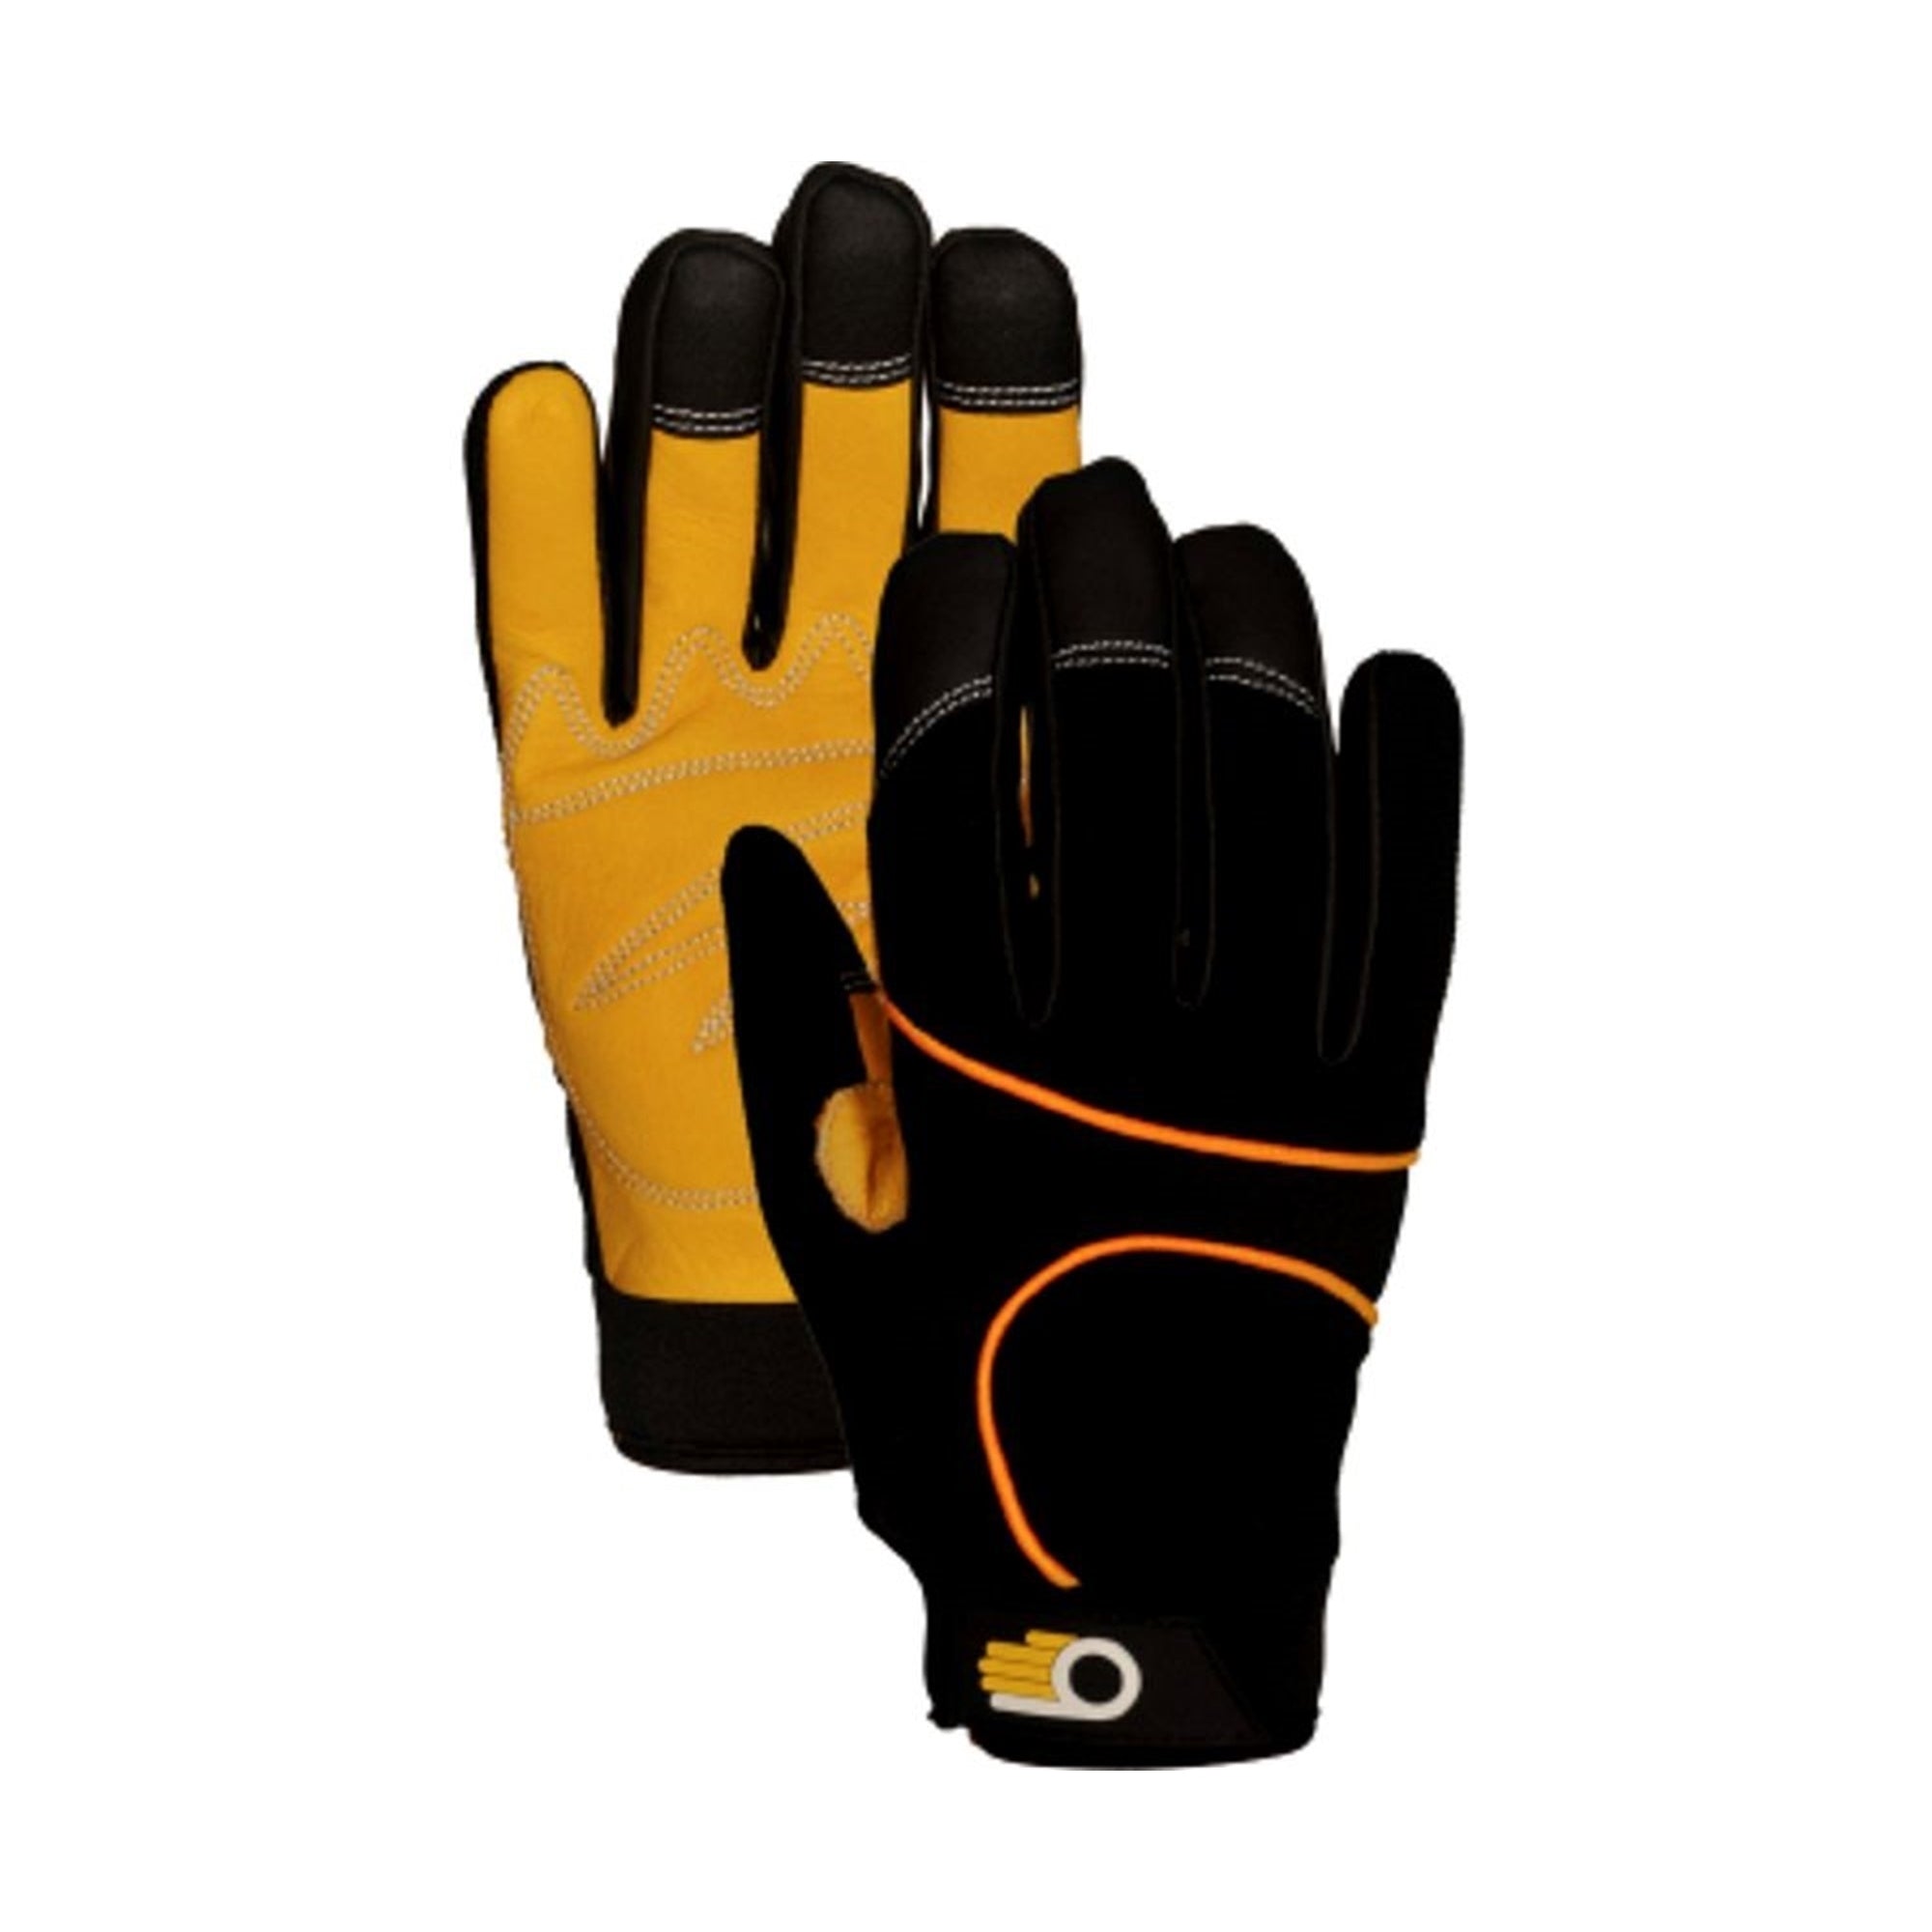 Bellingham Performance Leather Palm Gloves, Size XX-L